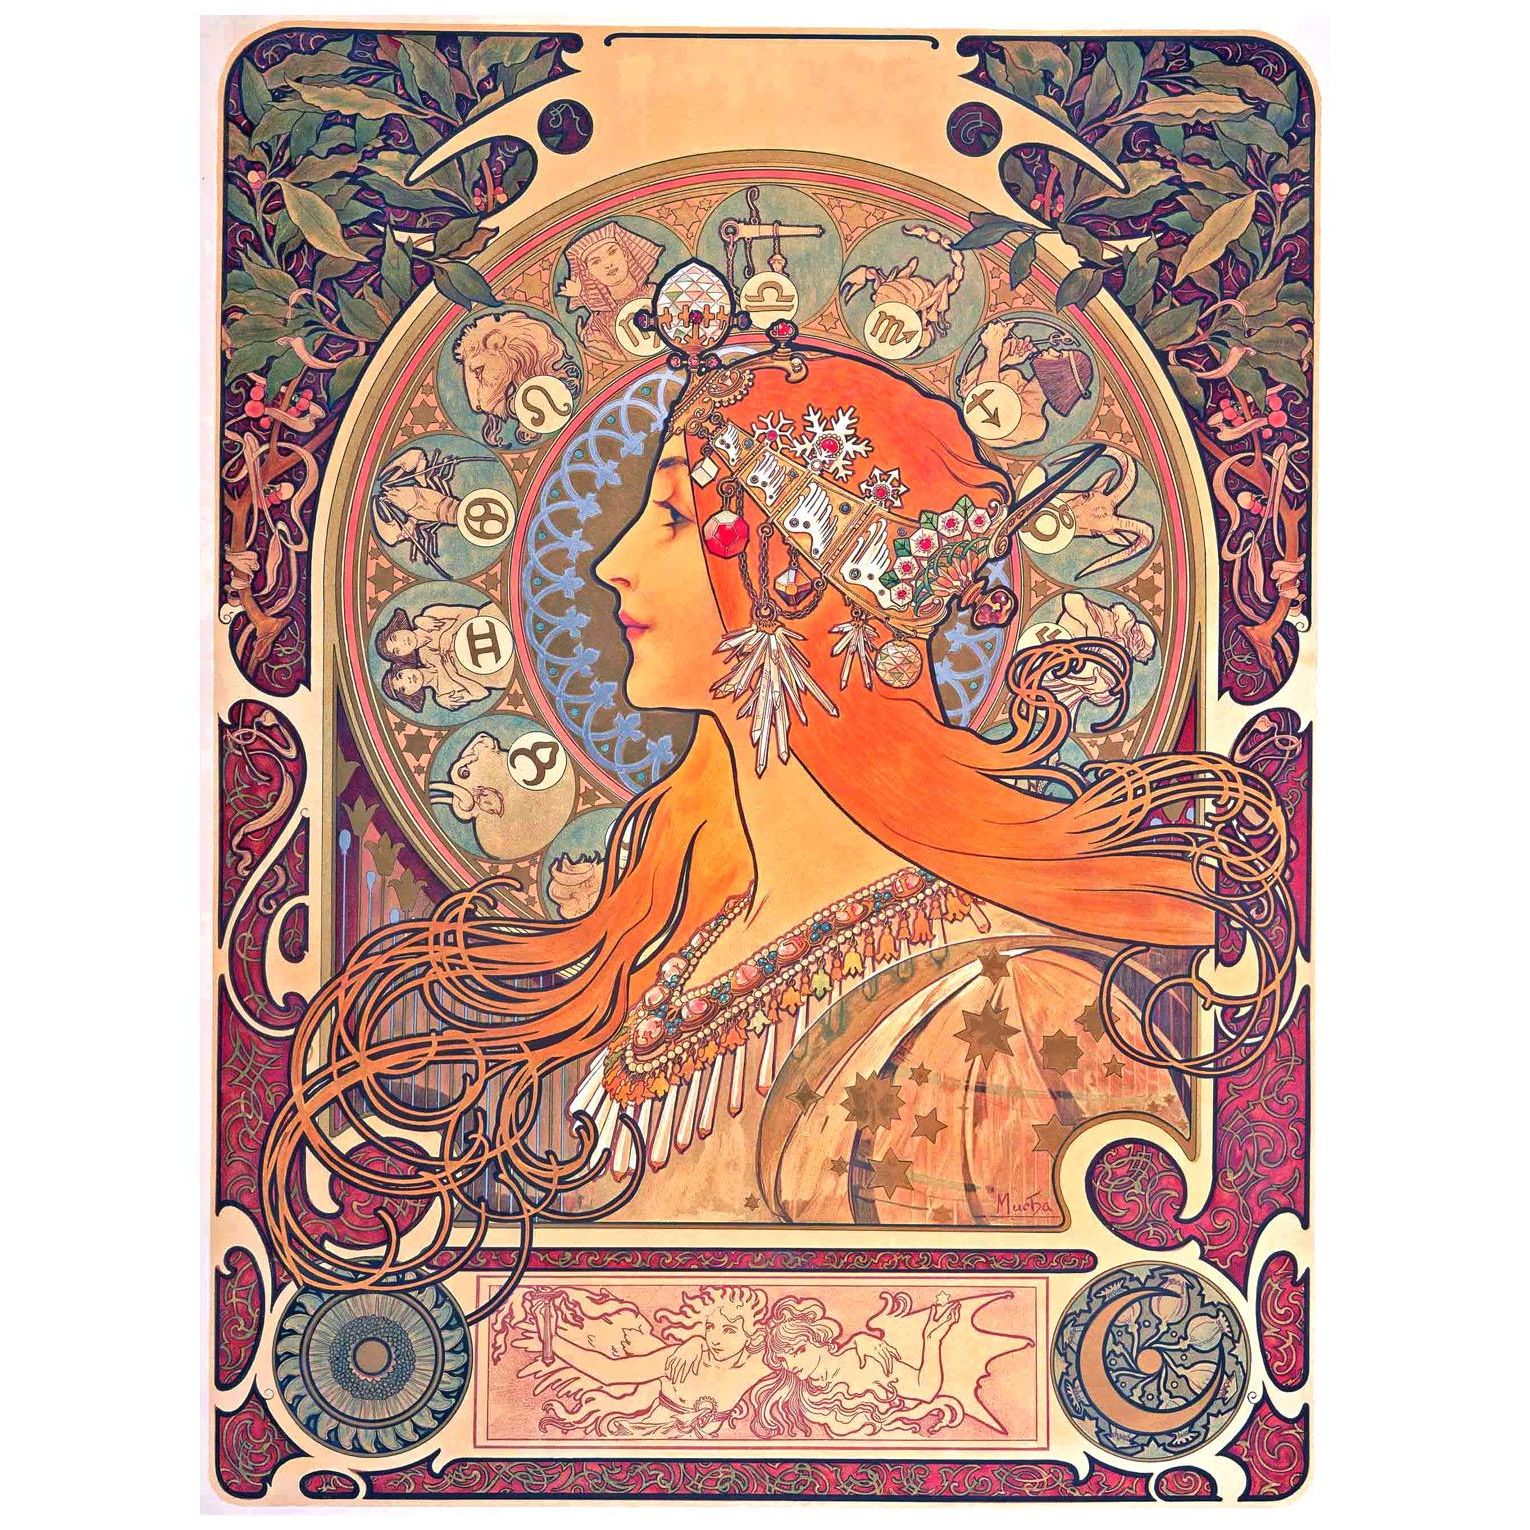 Alfons Mucha. Zodiac. 1896. Color lithograph